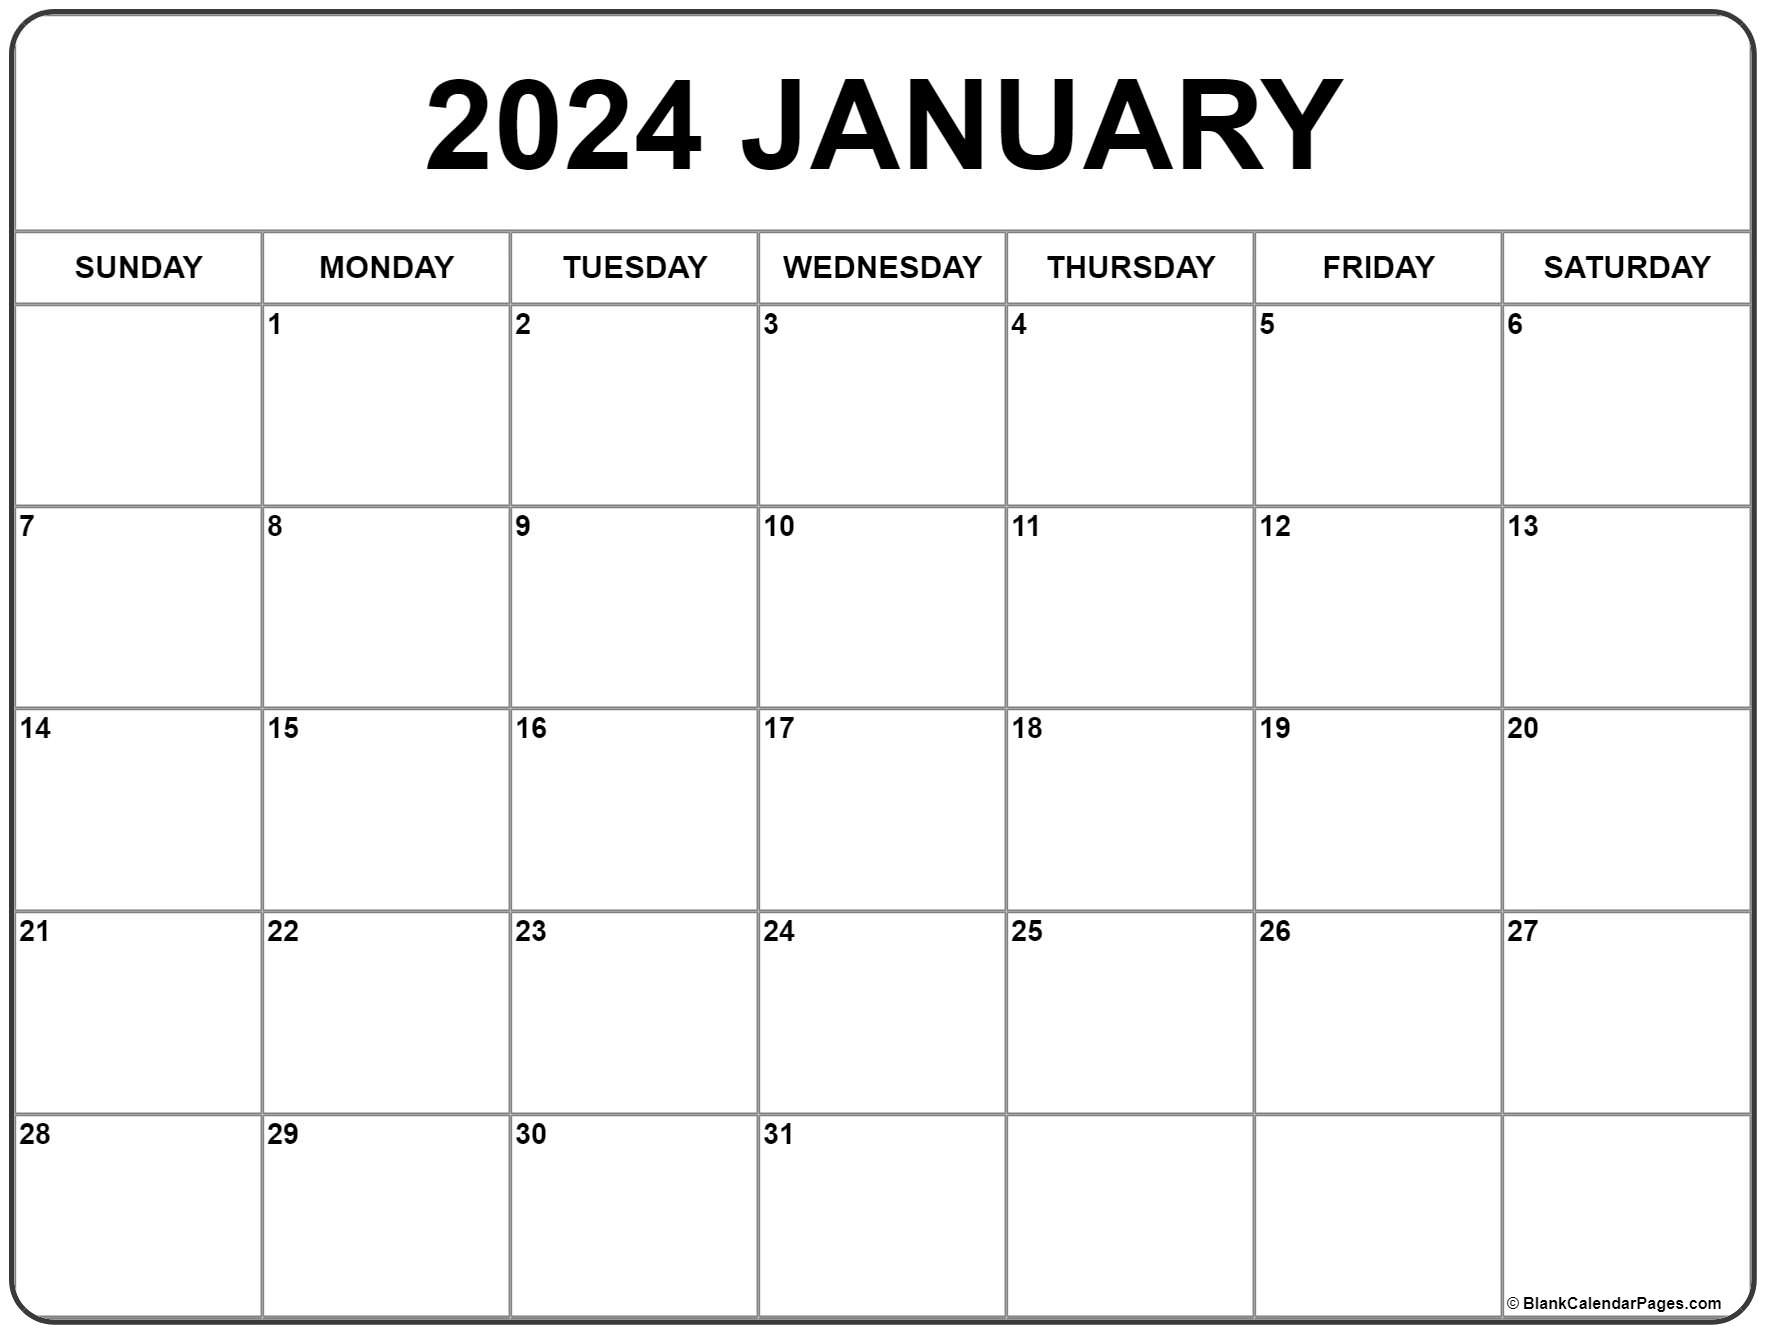 January 2024 Calendar | Free Printable Calendar for January 2024 Calendar Printable